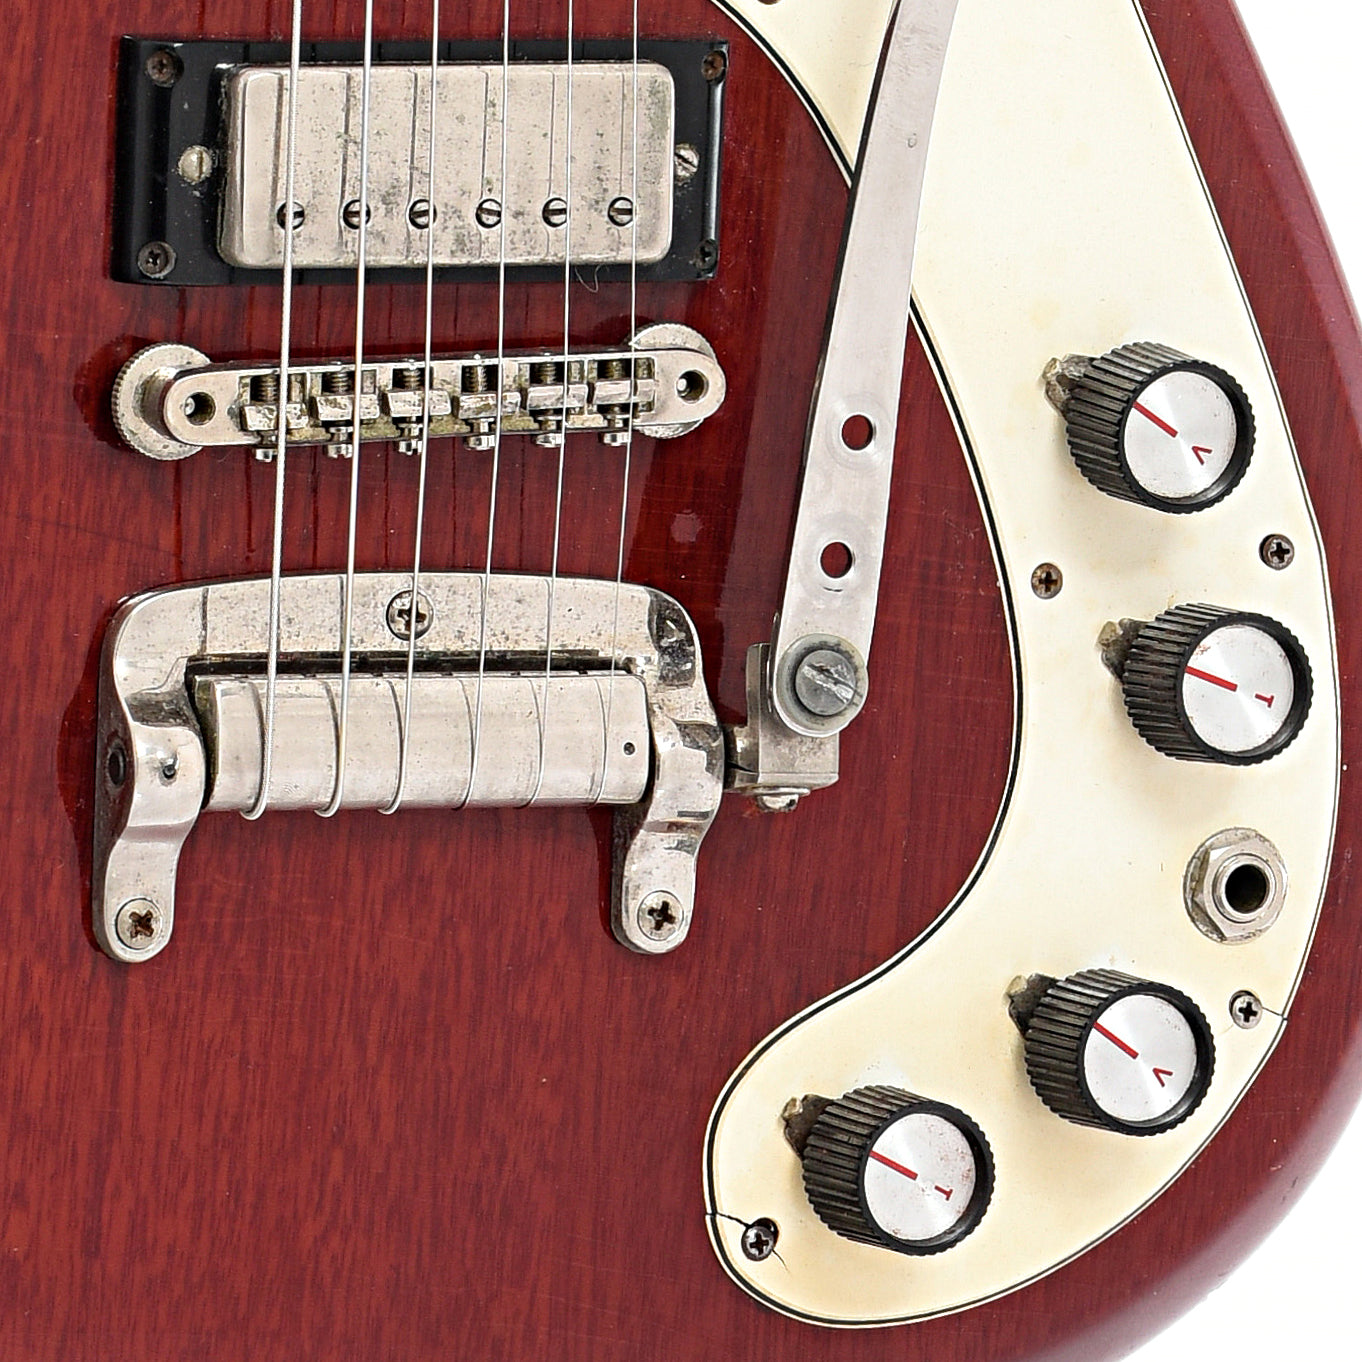 Bridge and controls of Epiphone Wilshire Electric Guitar (1964)